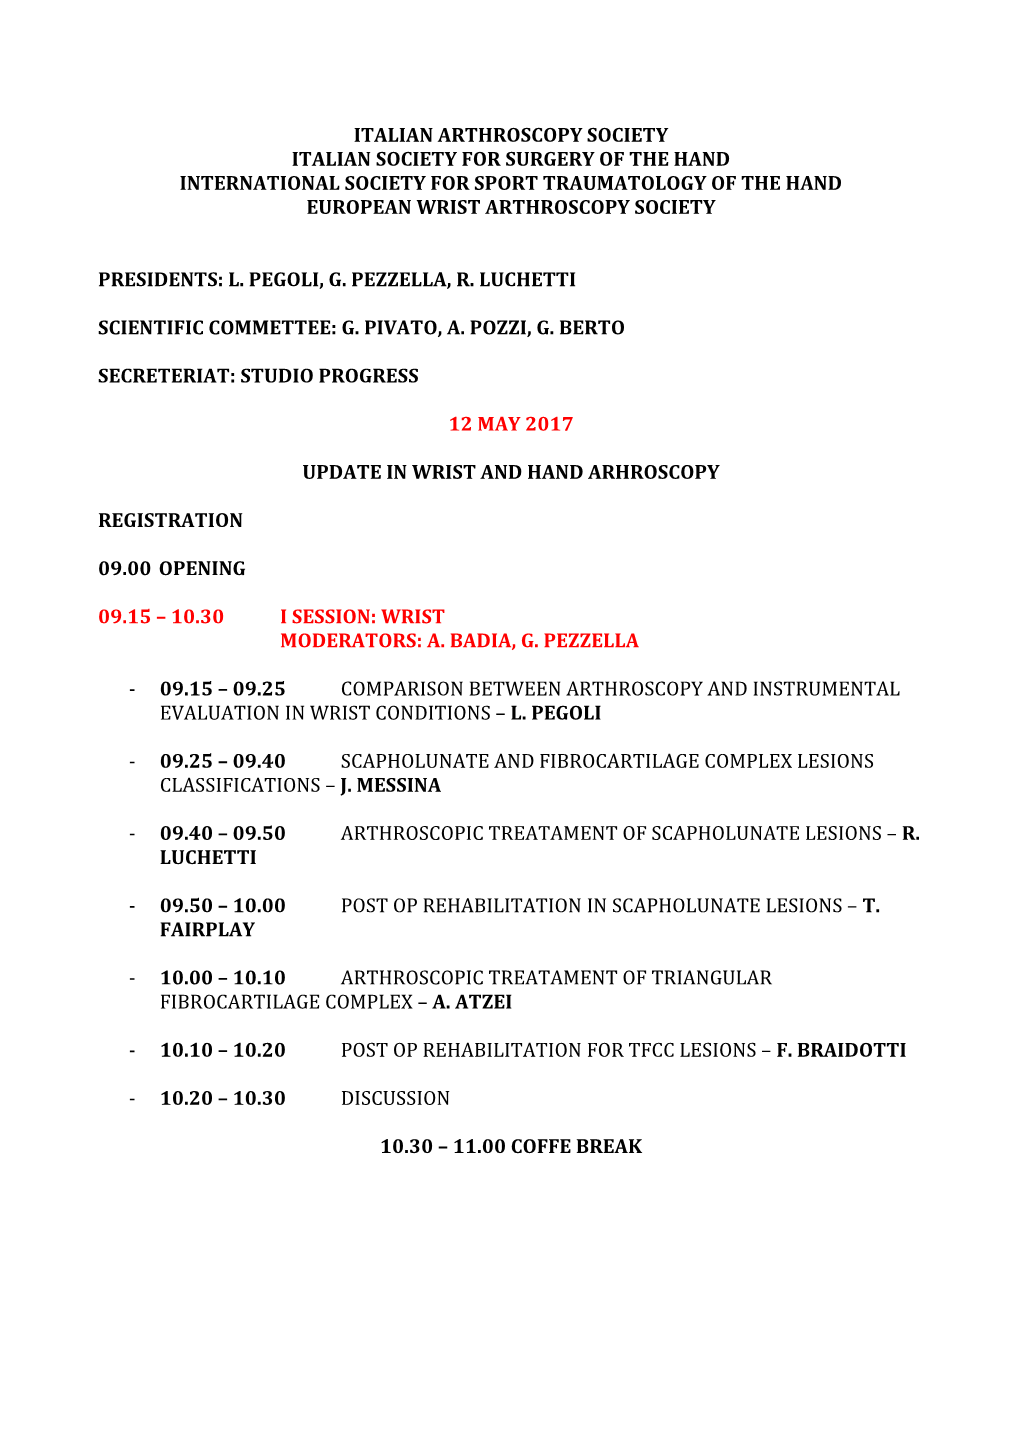 Italian Society for Surgery of the Hand